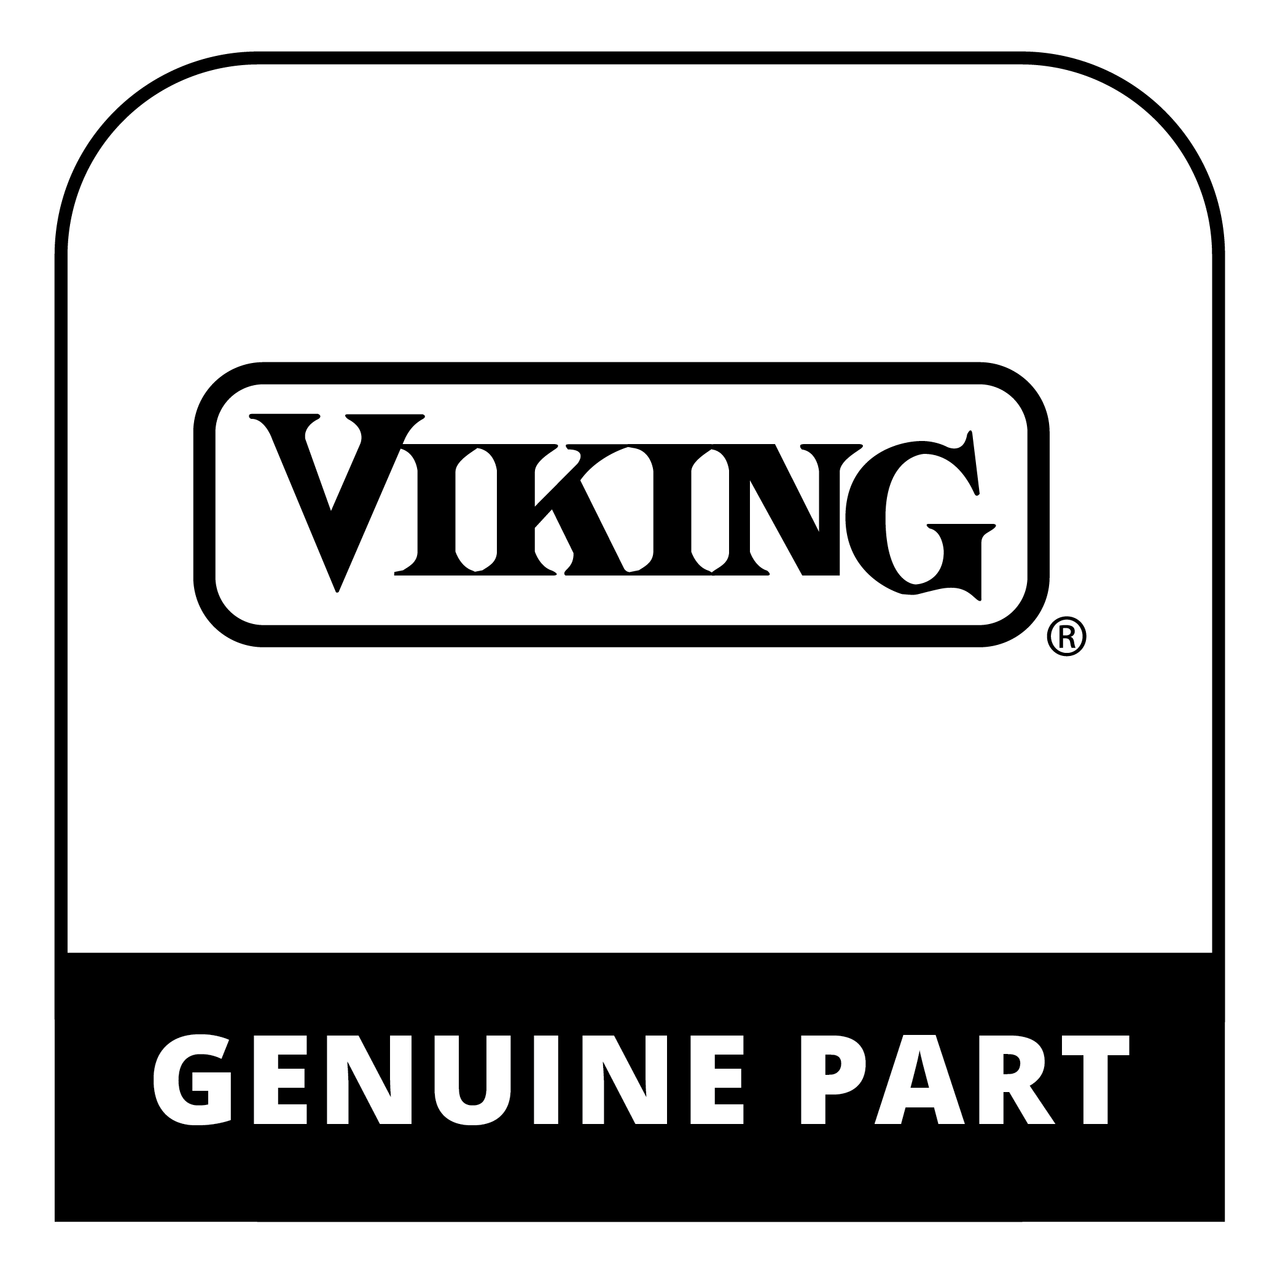 Viking 022576-000 - HOT GAS VALVE COIL - Genuine Viking Part